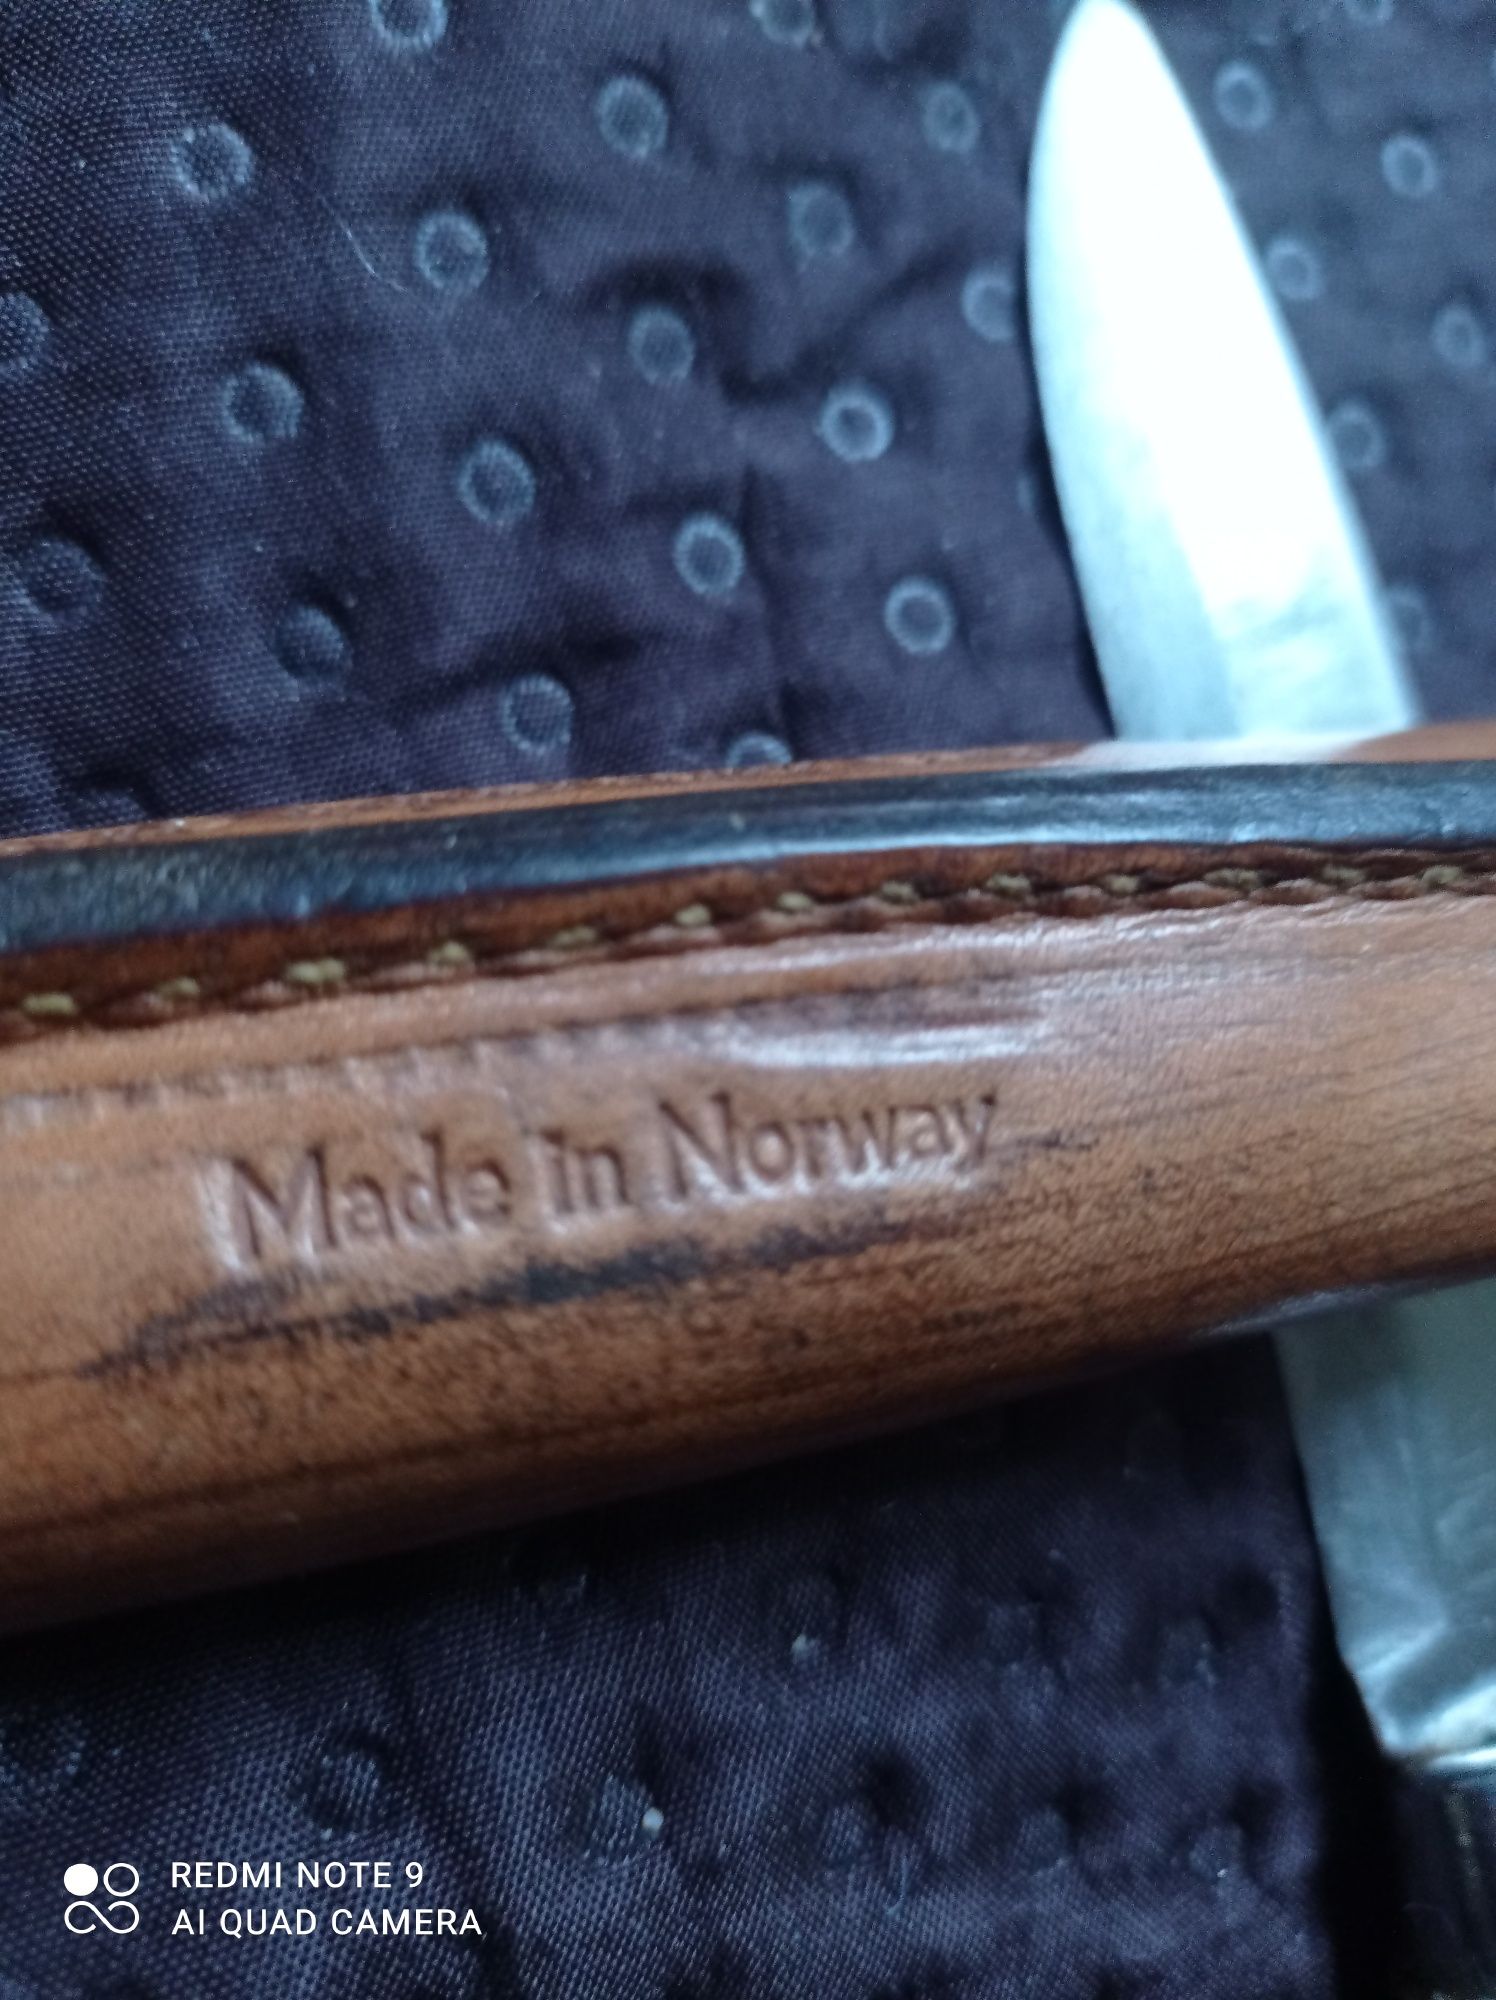 Stary nóż Geilo Rover Knivfabrikk Norway